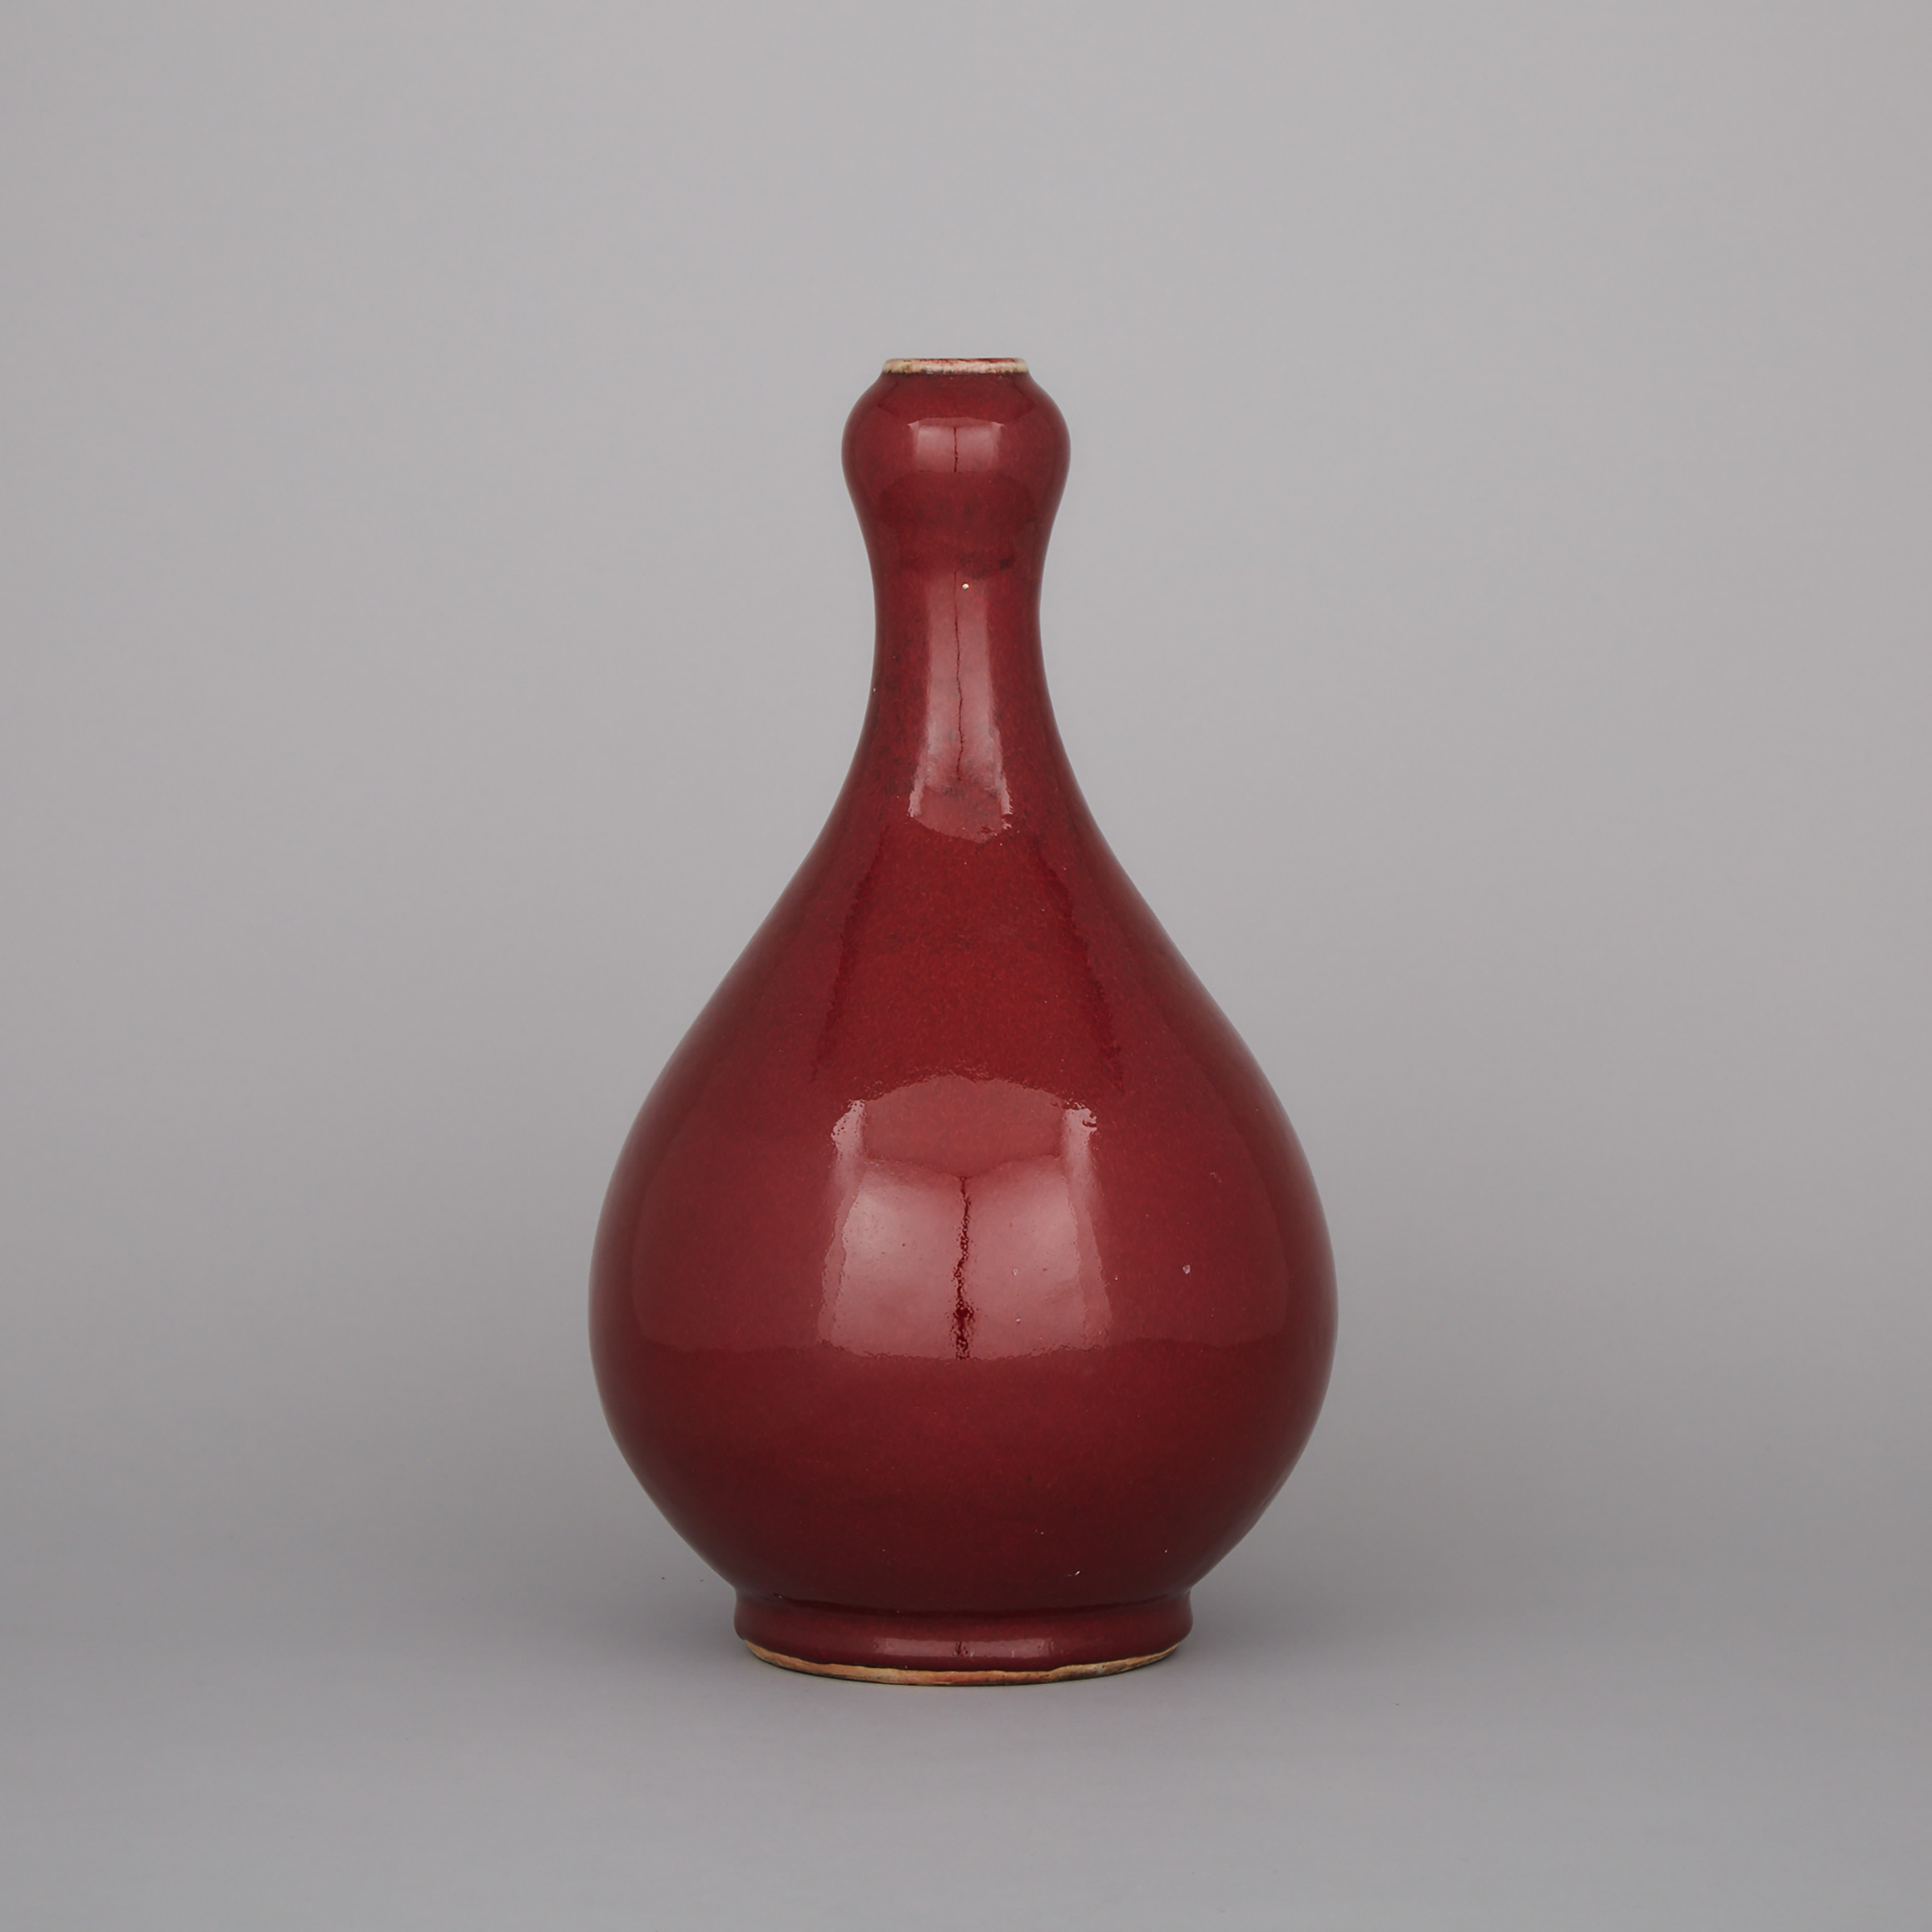 A Red-Glazed Garlic Mouth Vase, 18th/19th Century